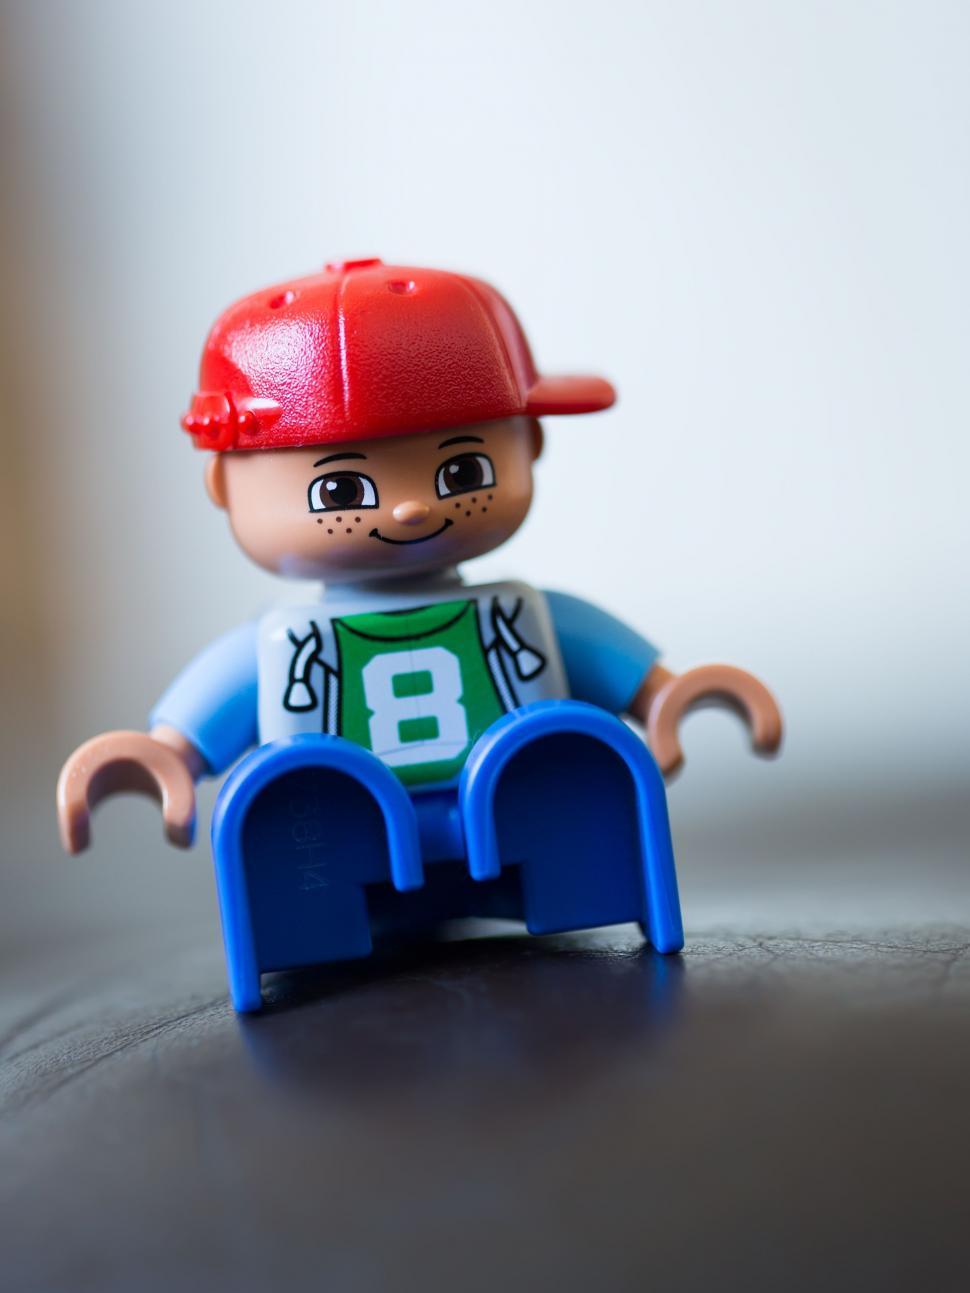 Free Image of Legoman Toy  